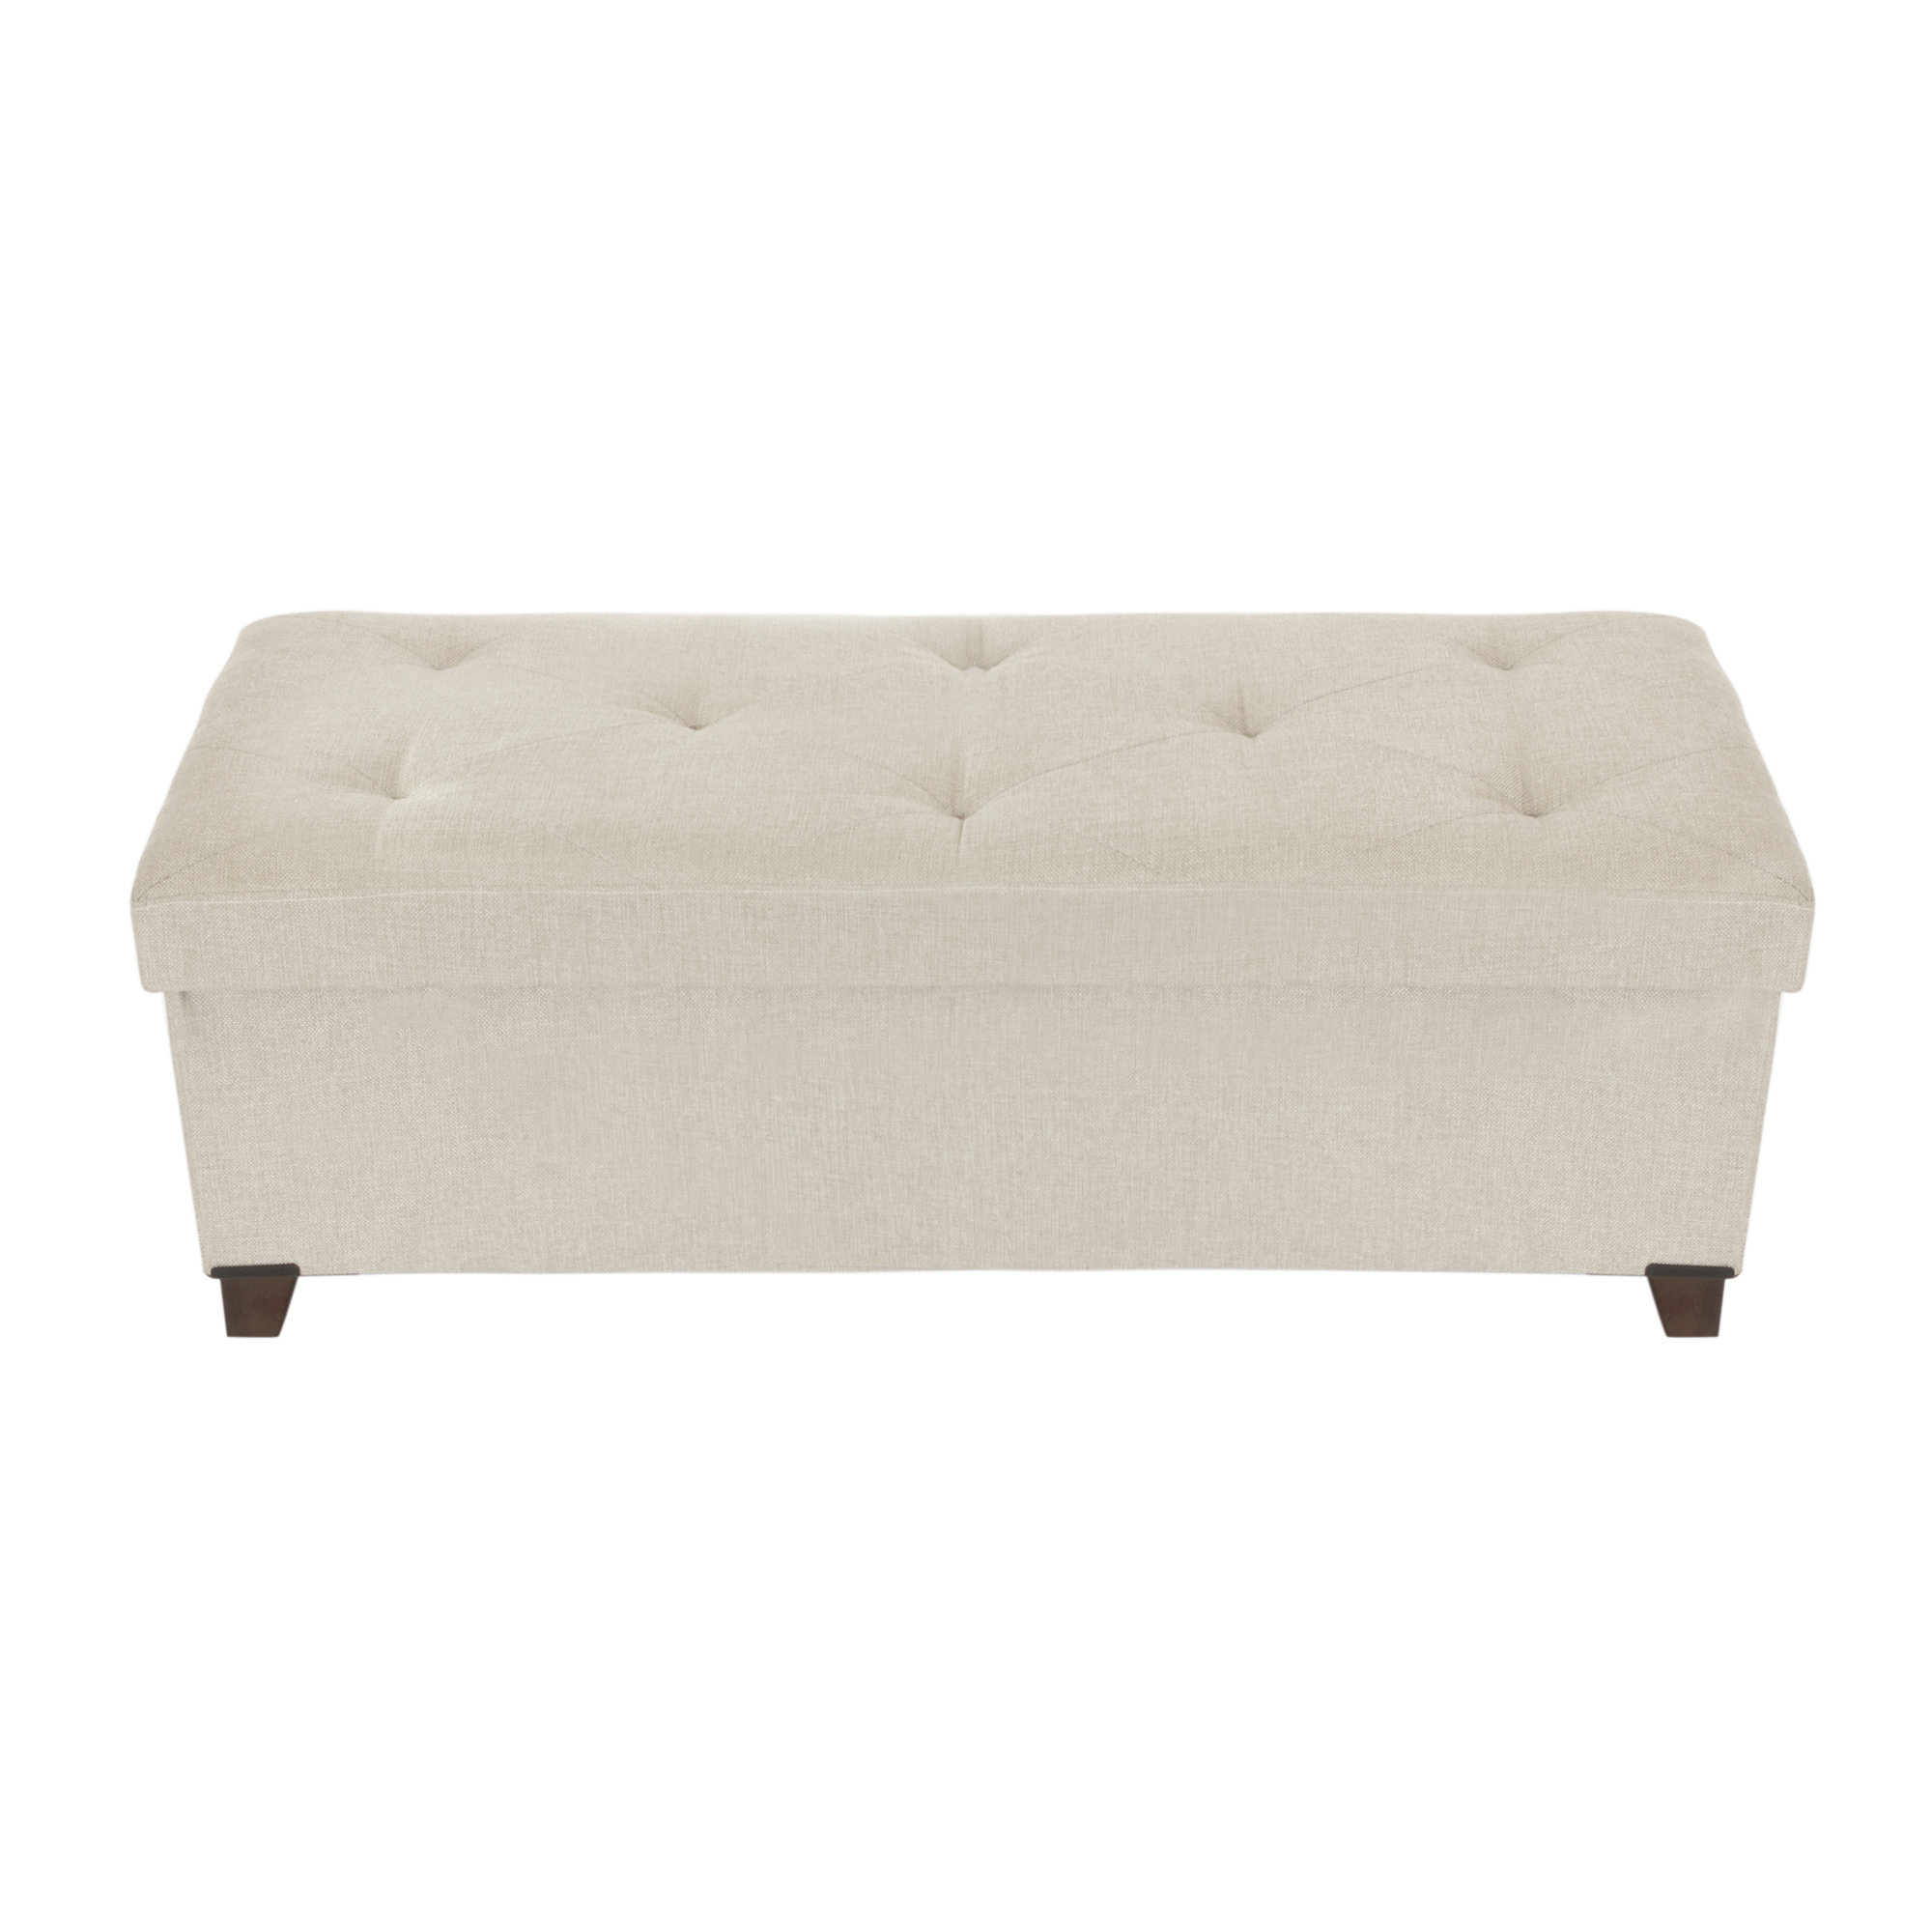 & Jenaya Wayfair Winston | Reviews Upholstered Legs Storage Solid Bench with Porter Wood